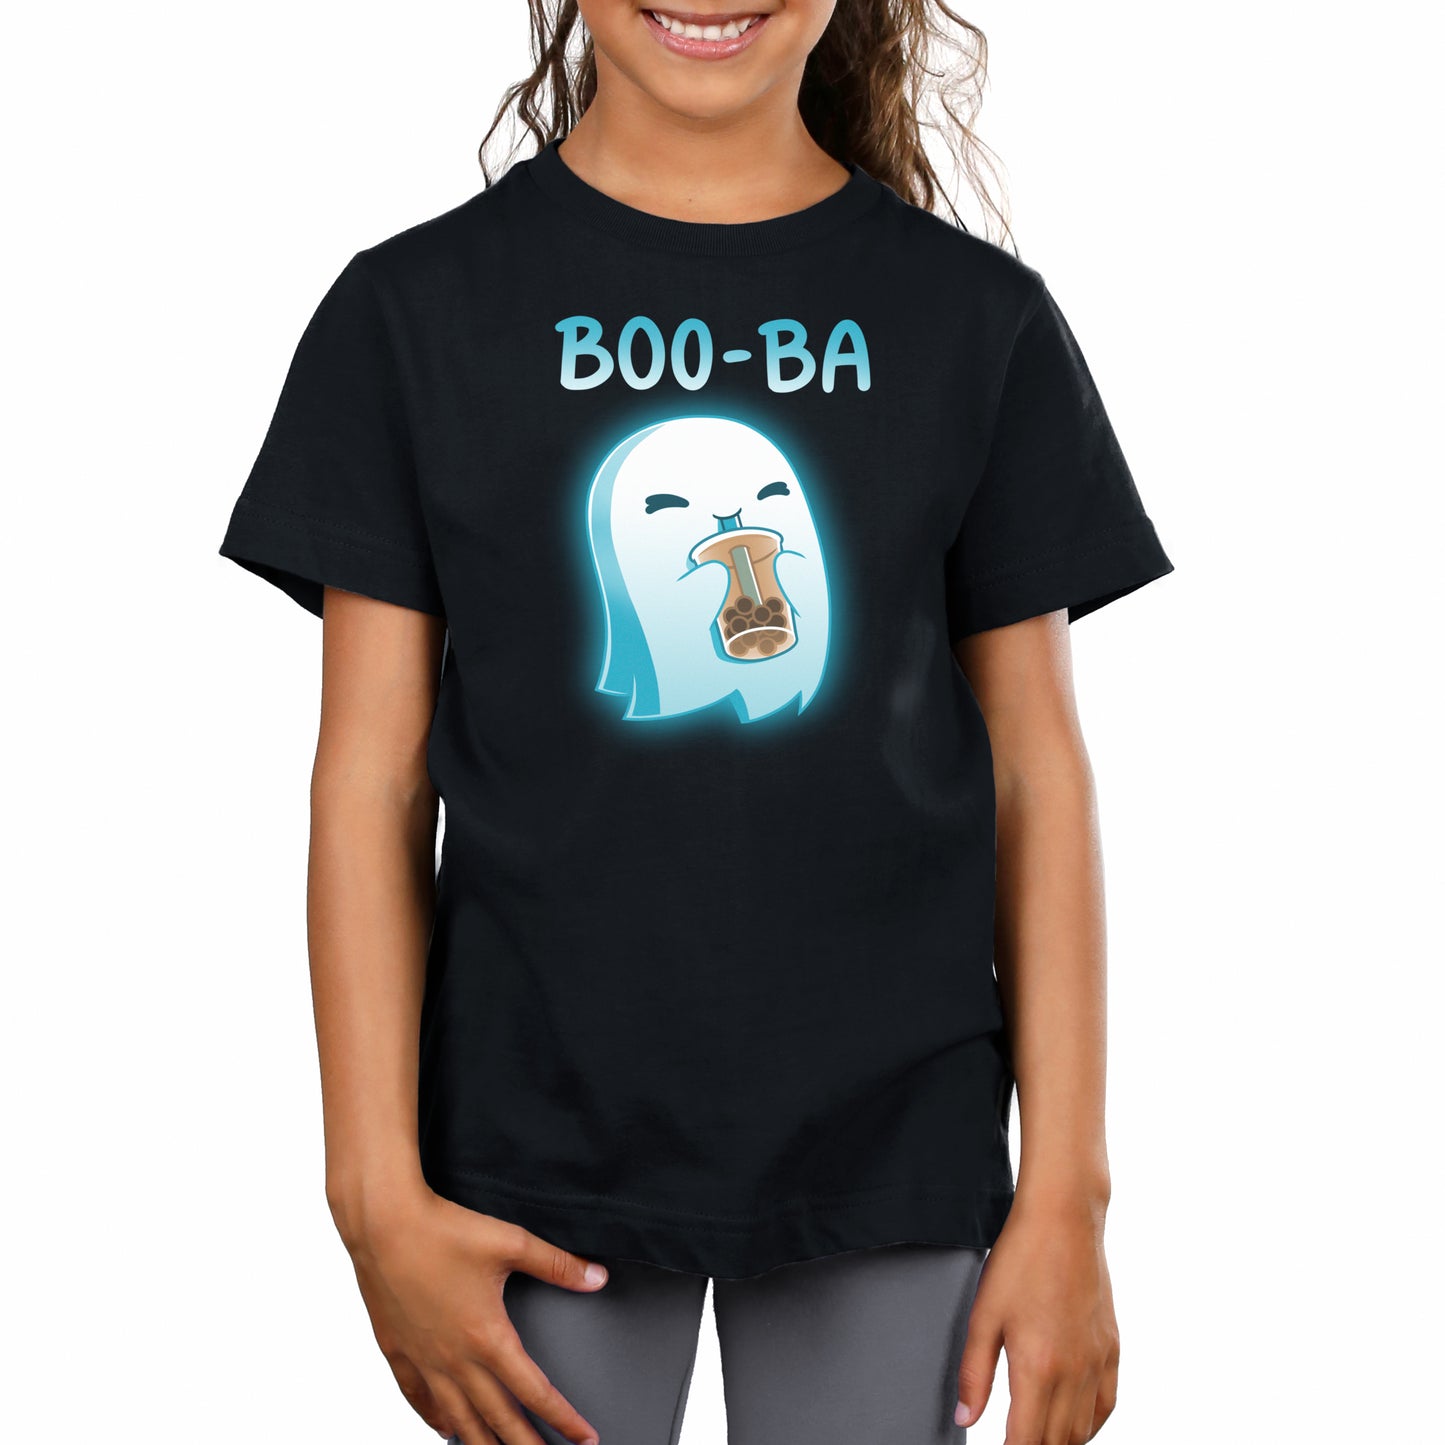 A girl wearing a black TeeTurtle t-shirt that says Boo-ba sips on boba tea.